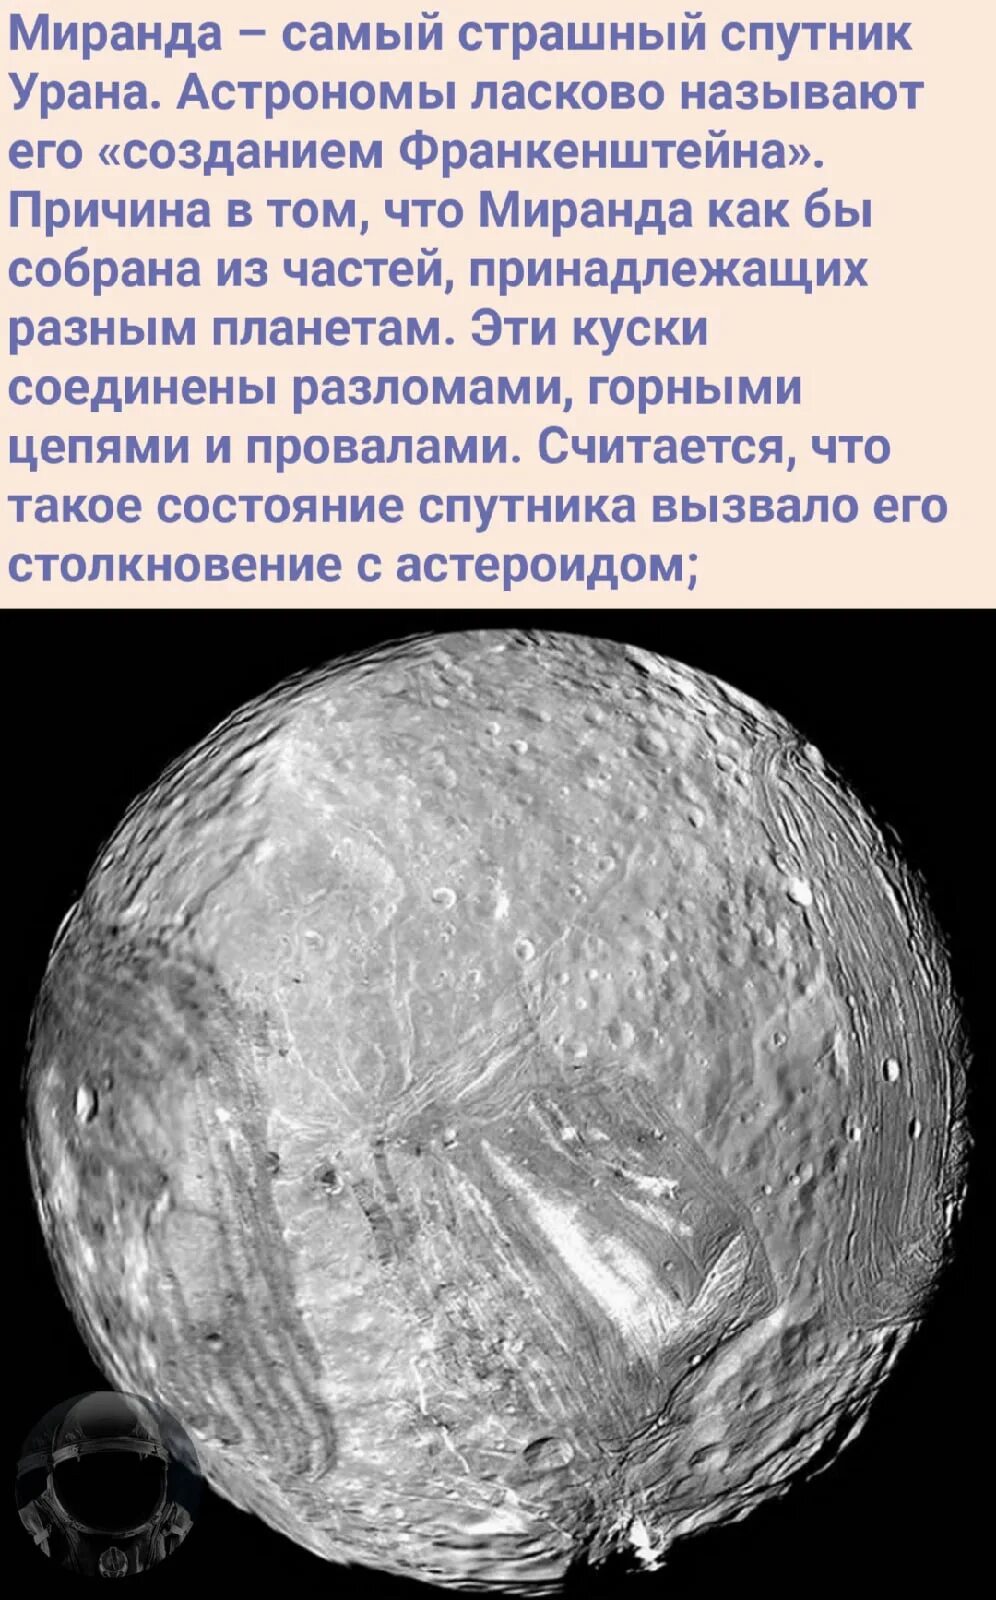 Миранда (Спутник). Спутники урана и Юпитера. Франциско Спутник урана. Бианка (Спутник). Большой спутник урана